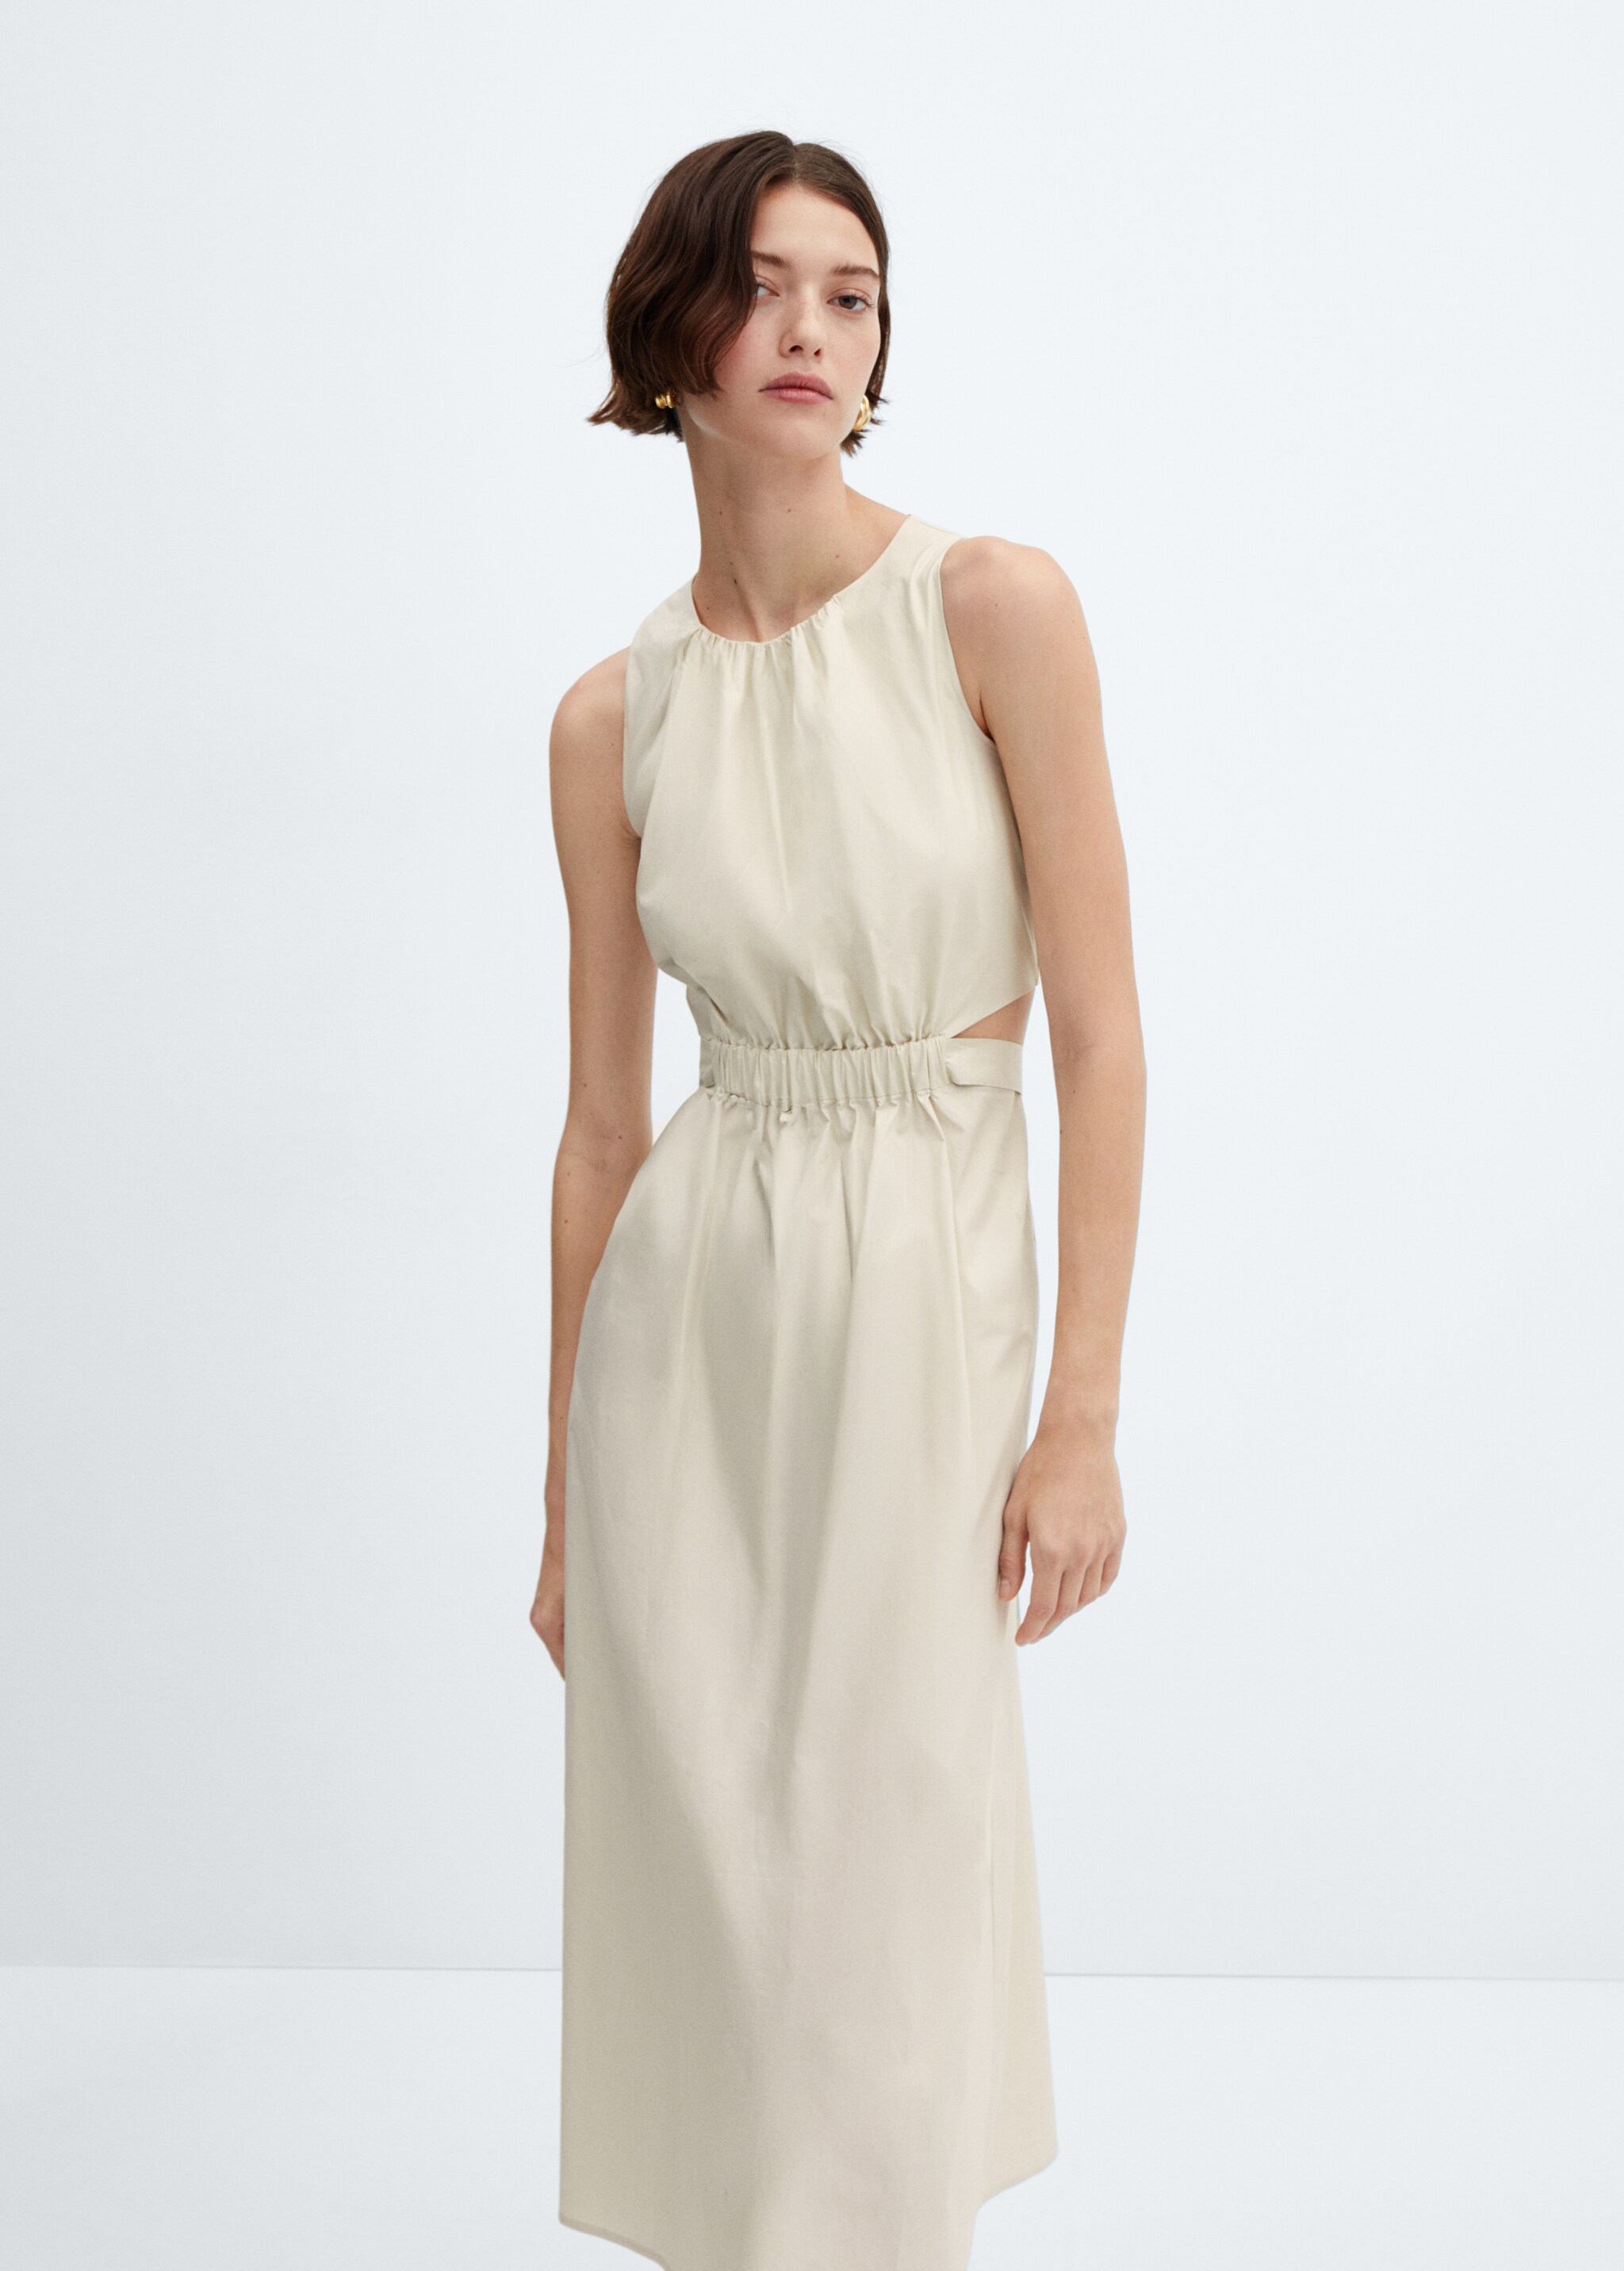 Slit dress with elastic waist  - Medium plane